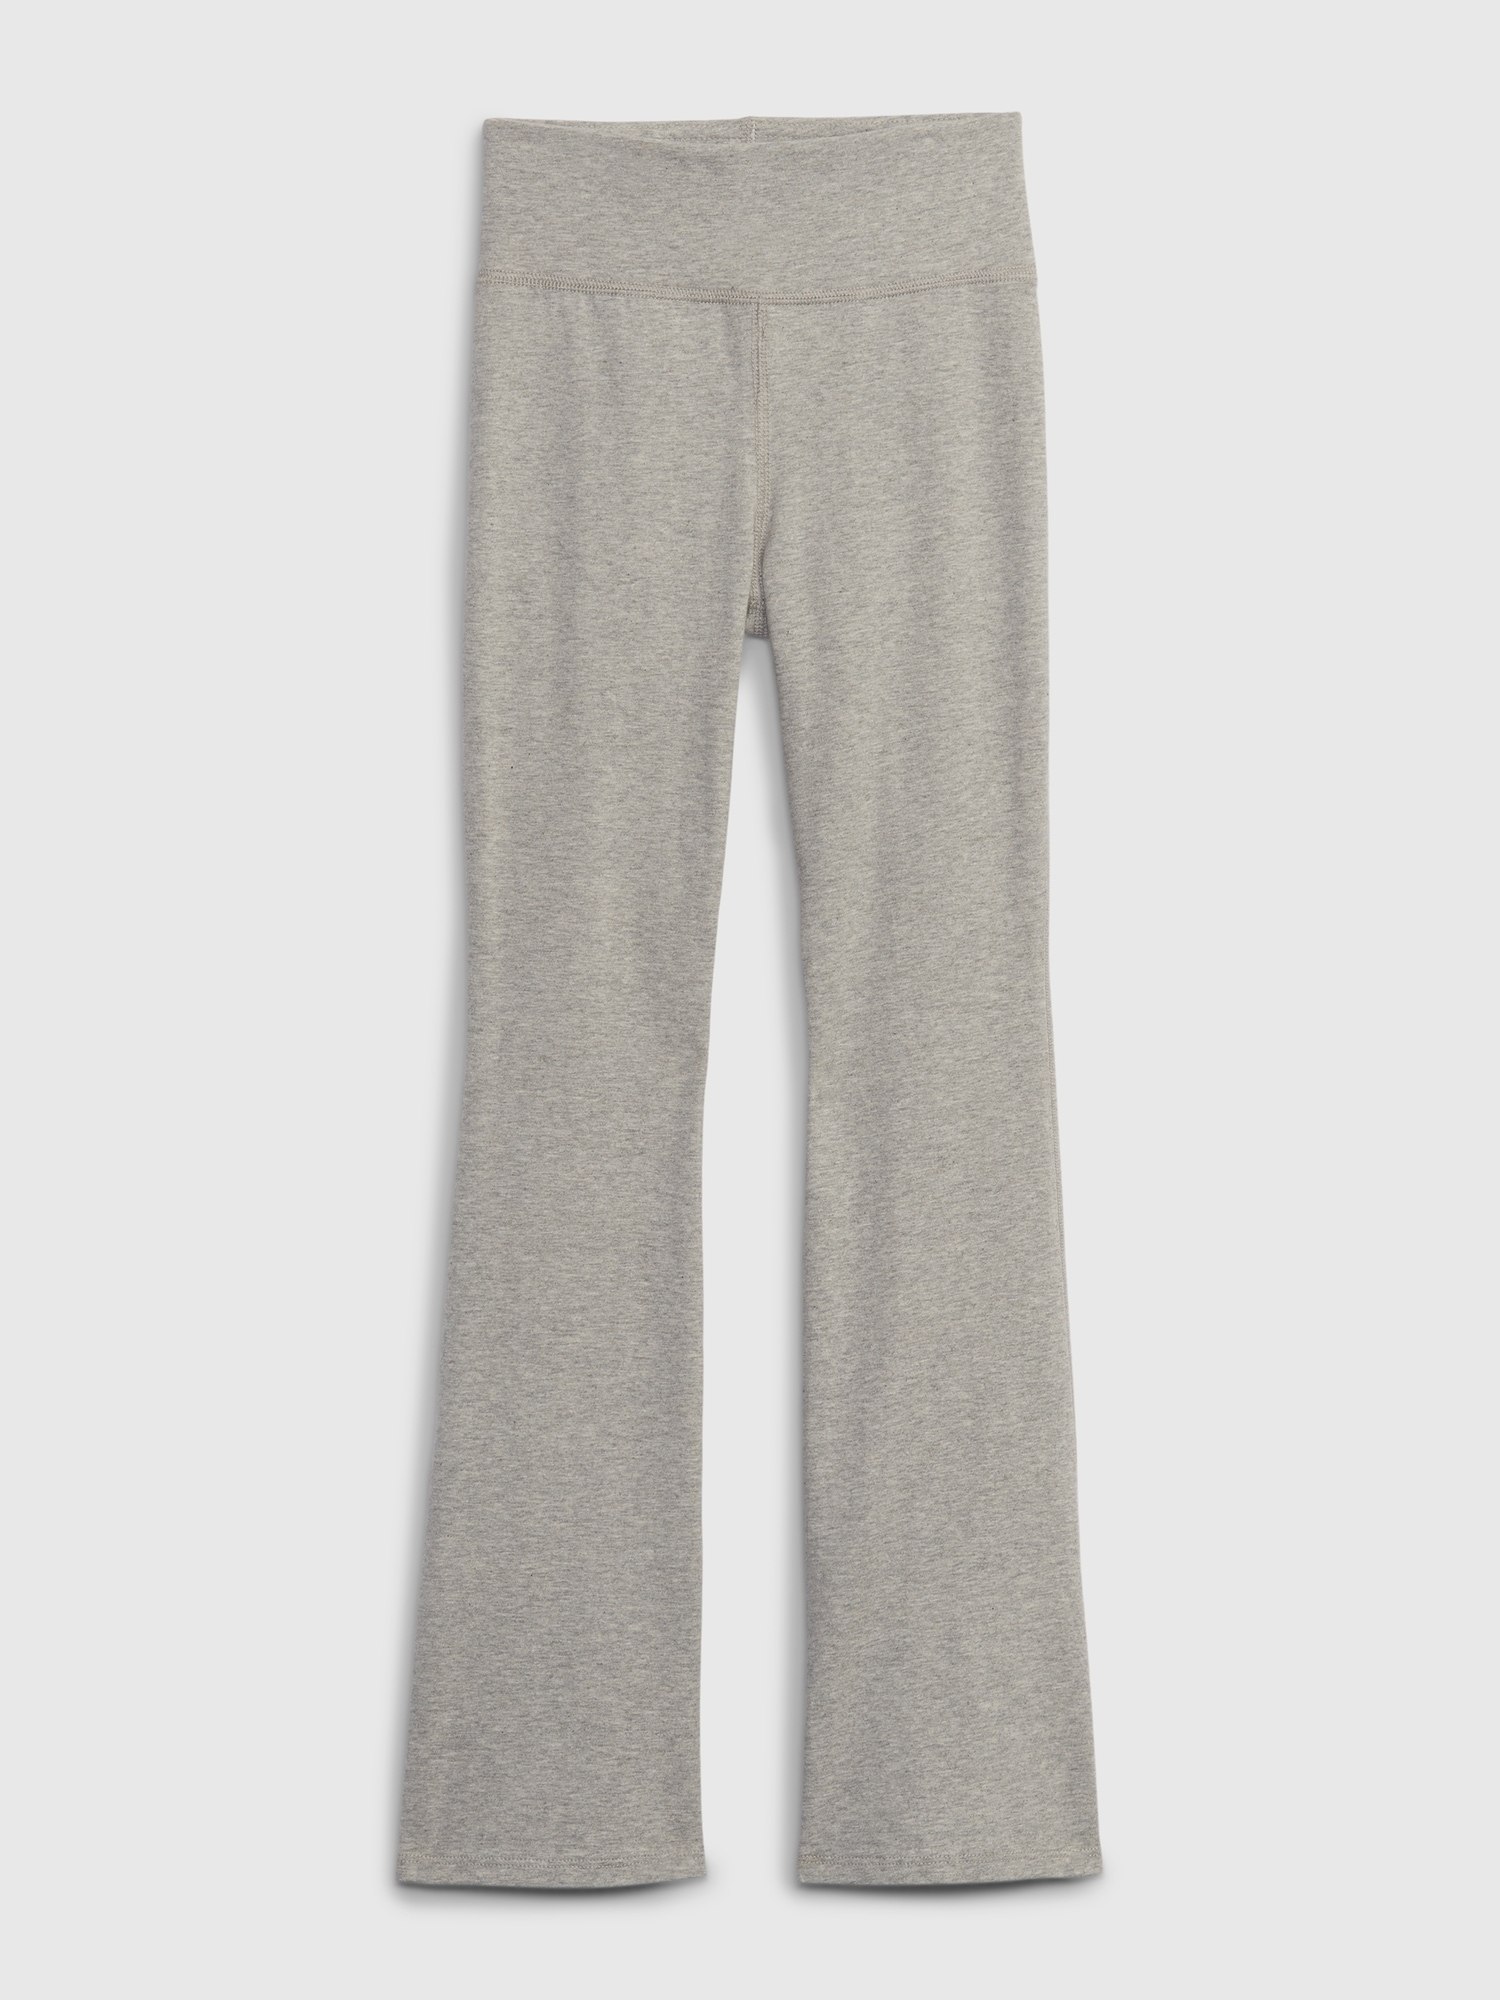 Woven Flare Pants Pattern UK Size 4 16 tall, Regular and Petite -   Canada